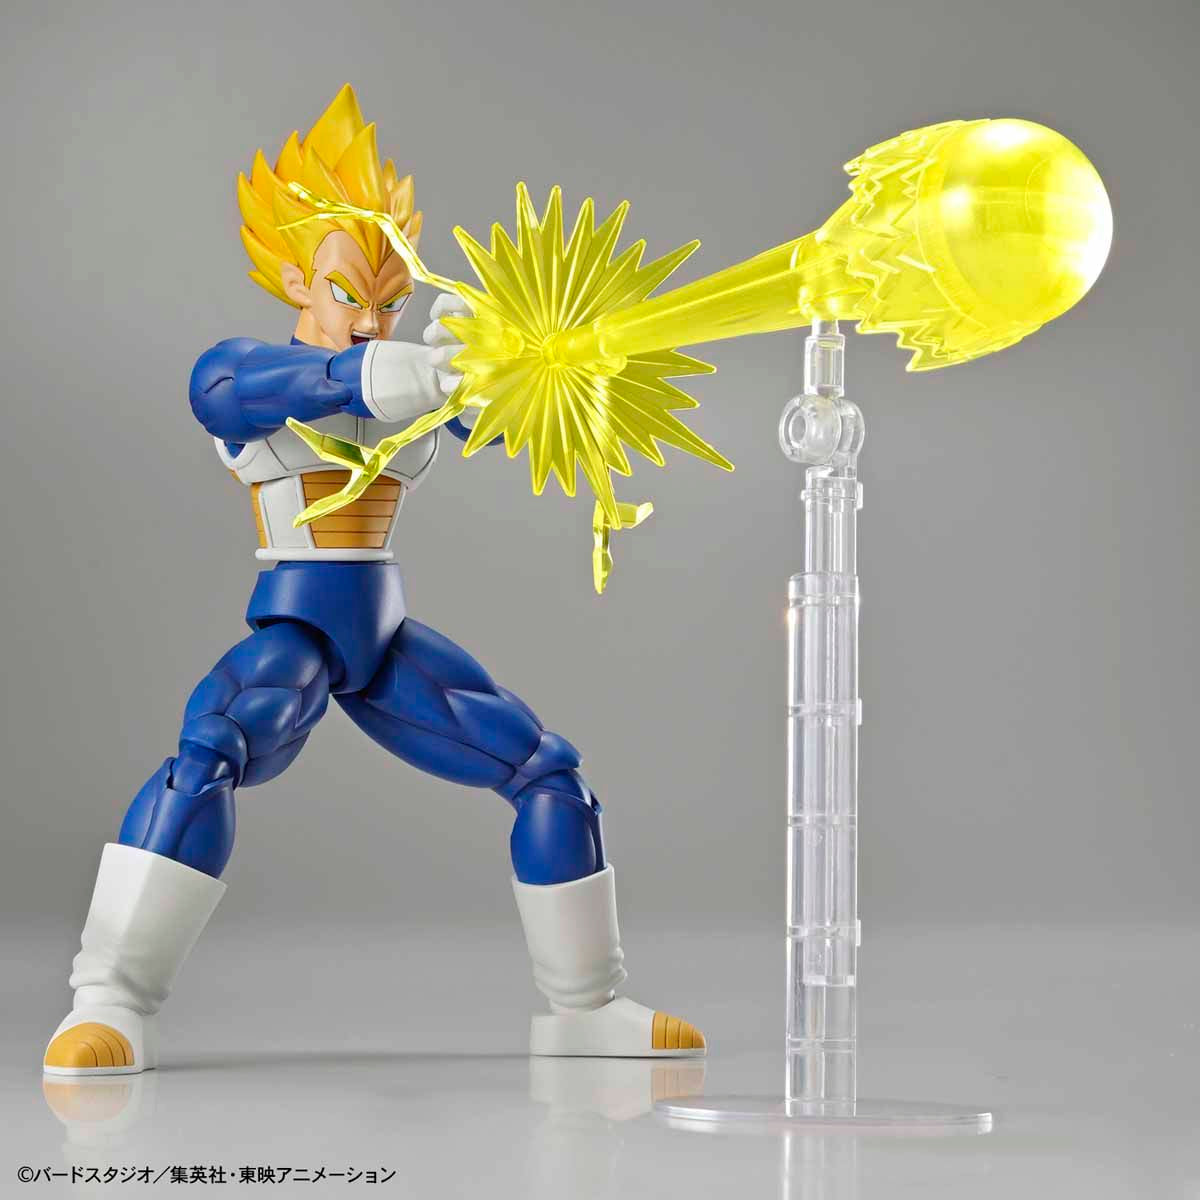 Dragon Ball - Super Saiyan Vegeta - Figure-rise Standard Model Kit, Includes Big Bang Attack and Final Flash effect parts, Stands at 145mm, Nippon Figures